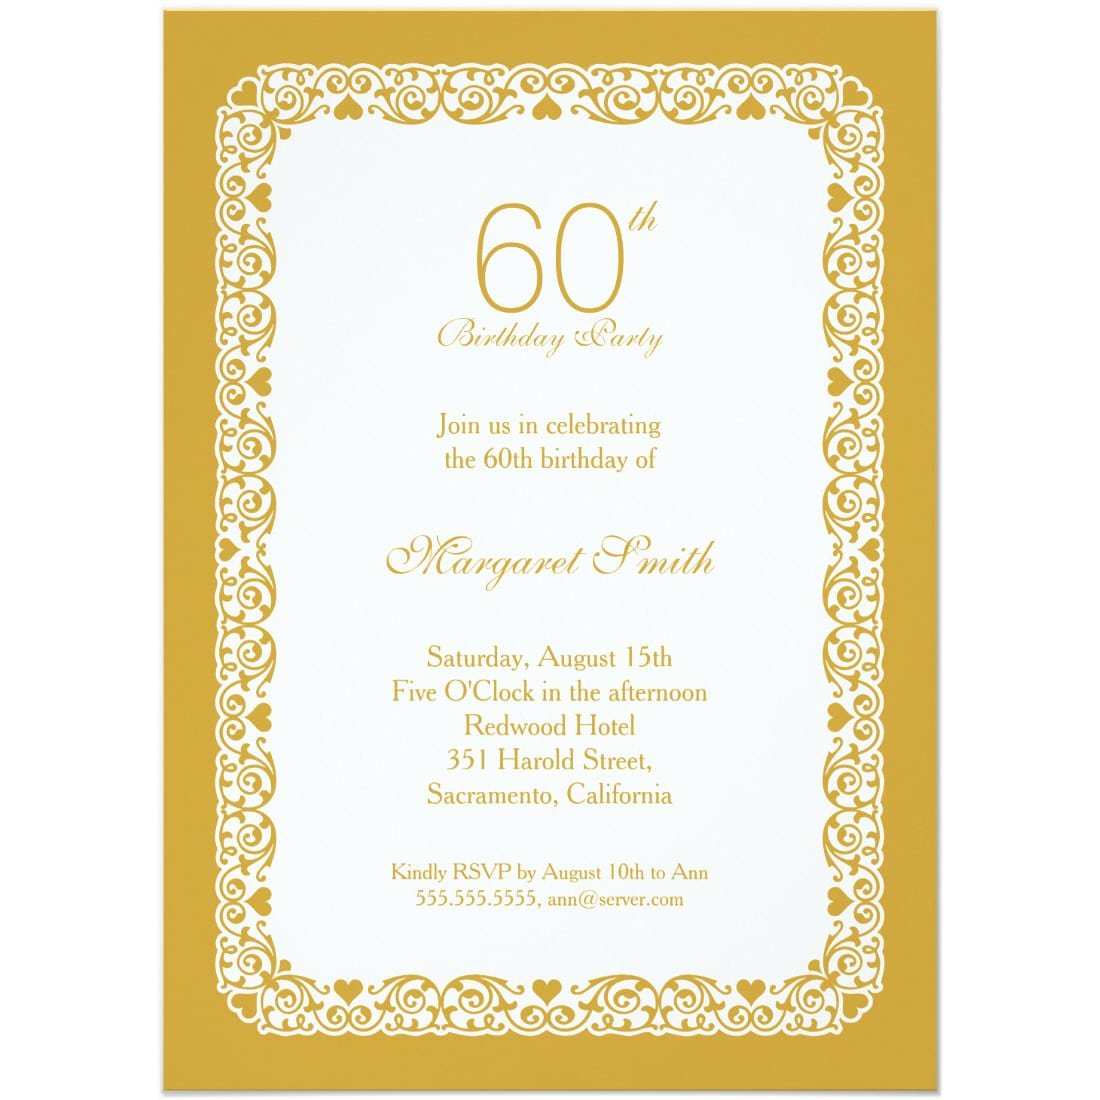 60th Birthday Party Invitations